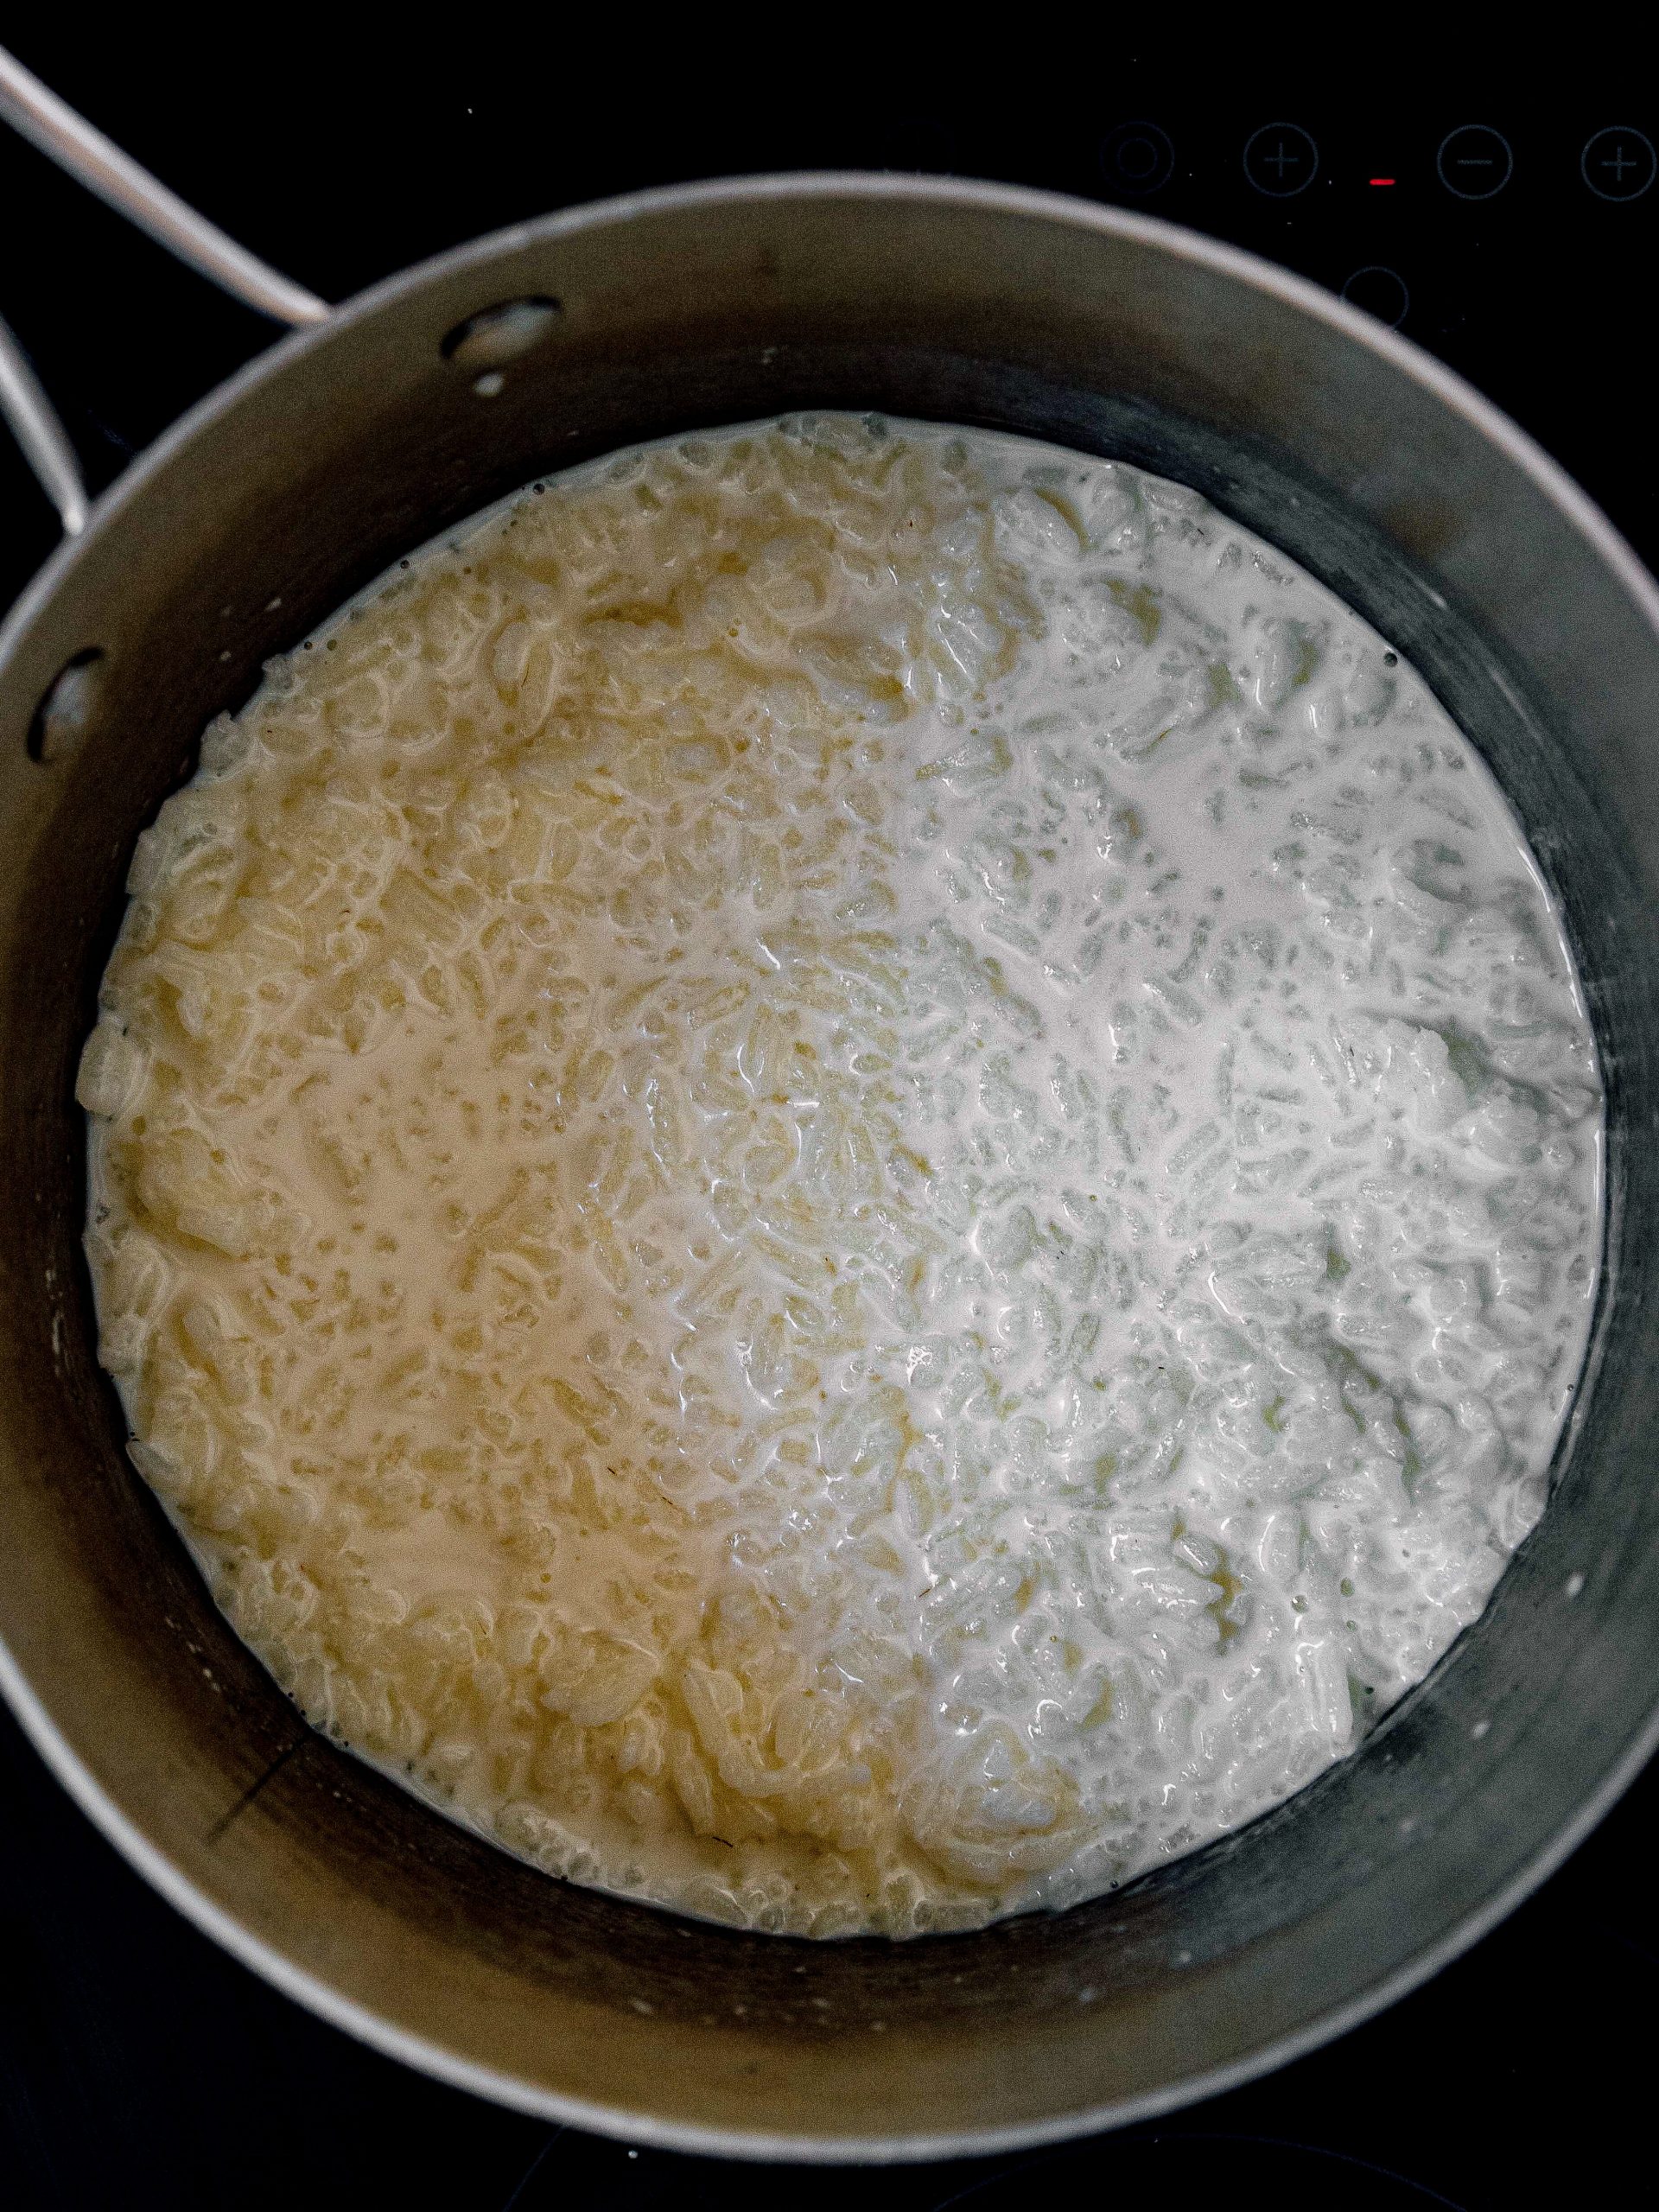 Over medium-low heat, using a saucepan combine milk, sugar, and rice.